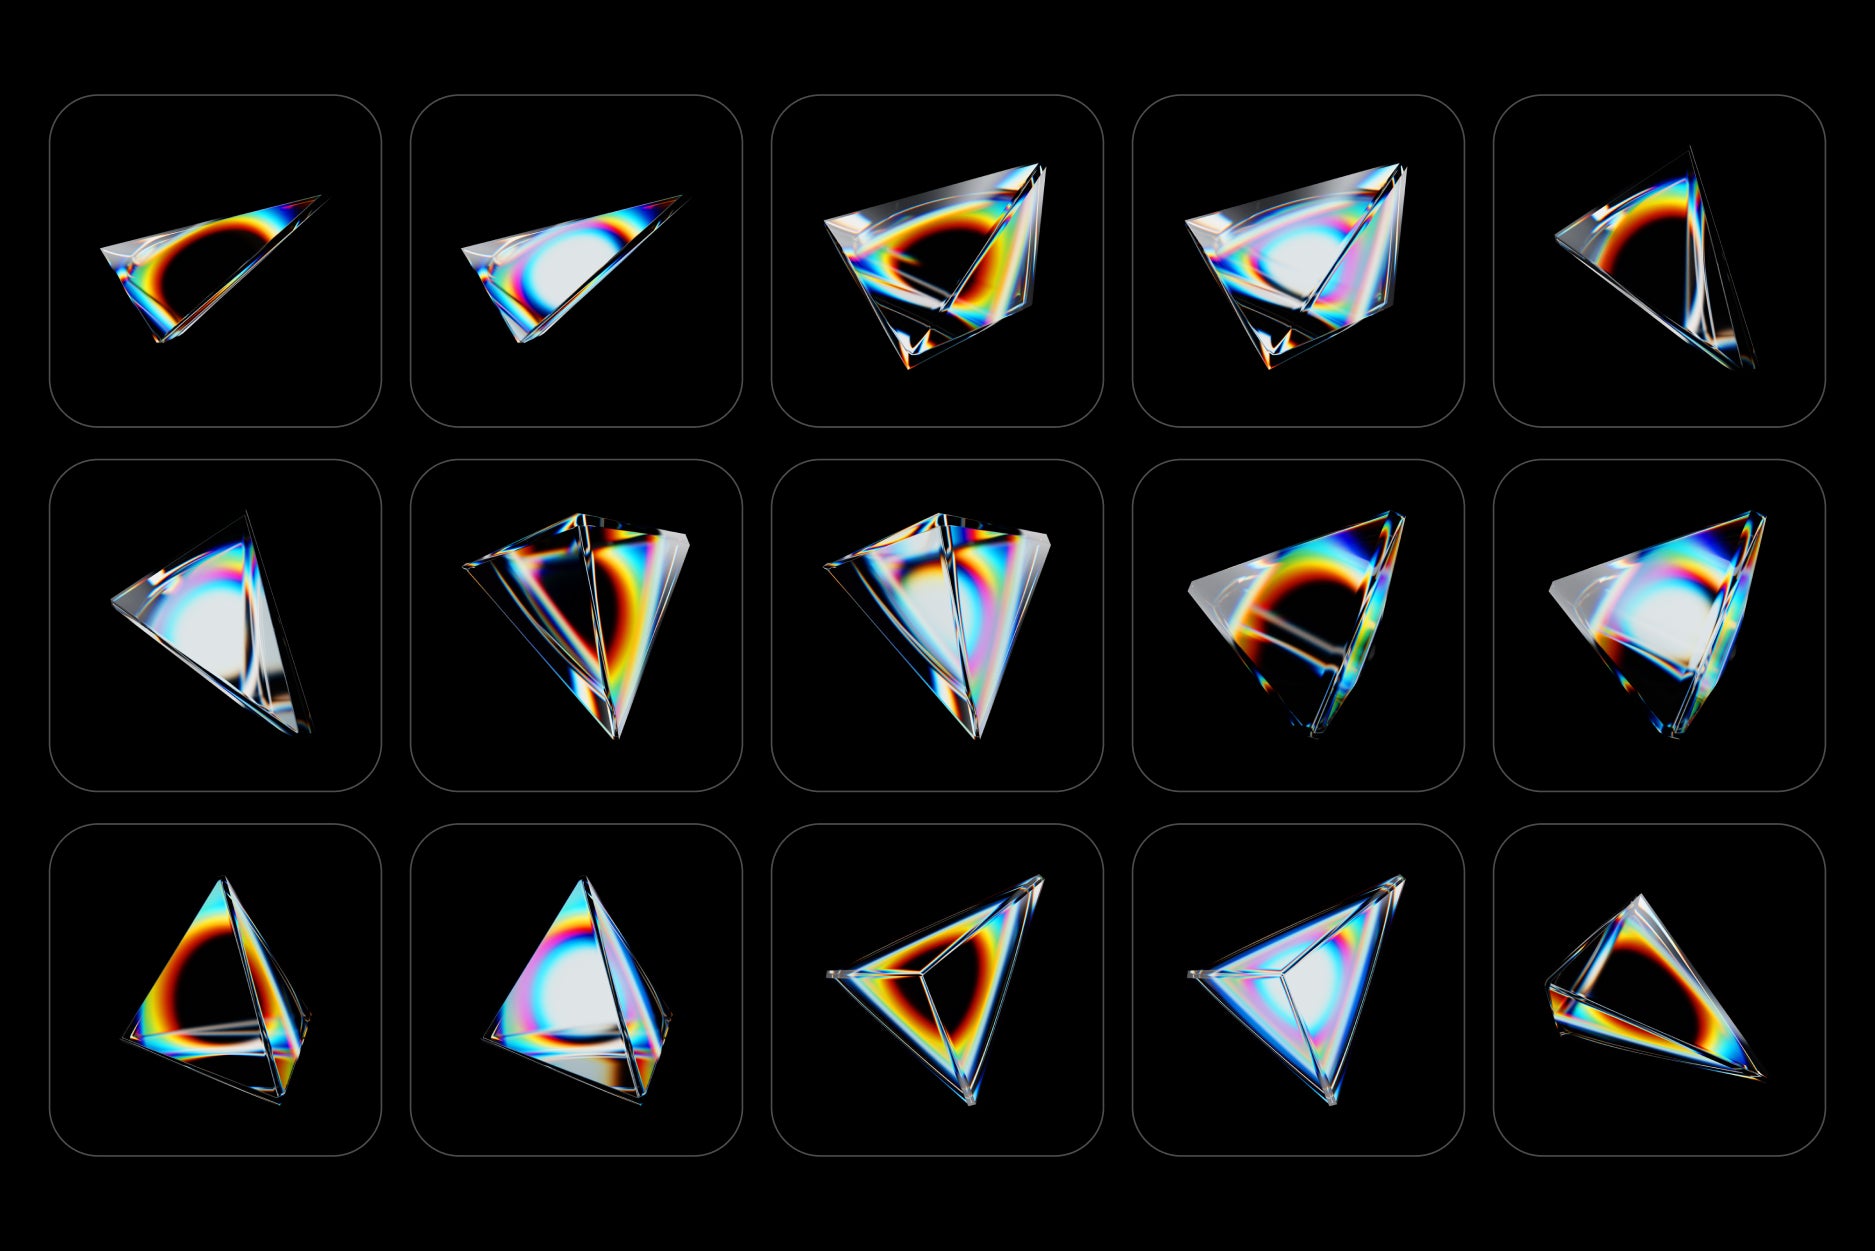 Prism Glass 3D Shapes